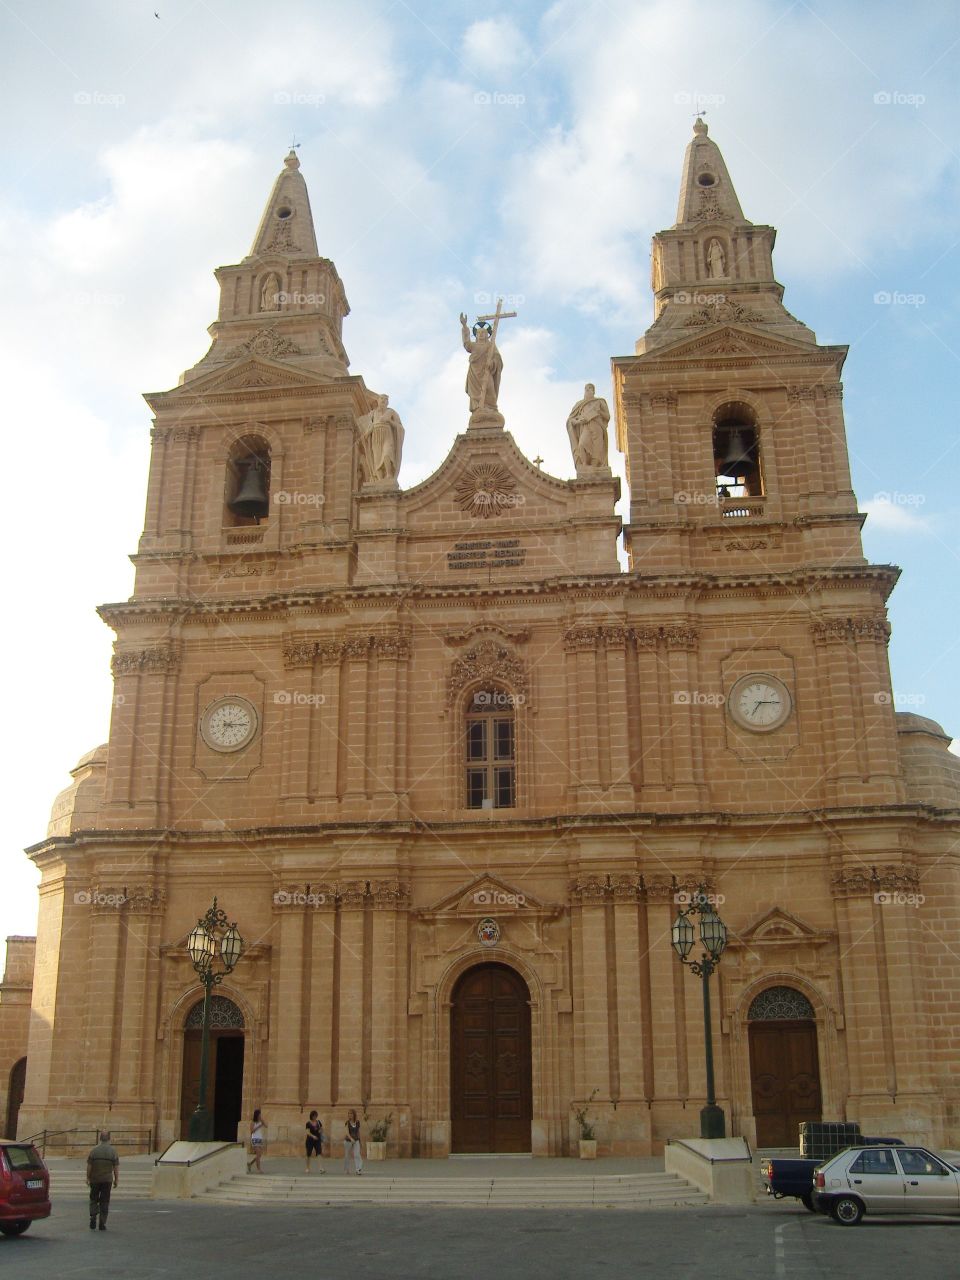 Malta Church of Saint John